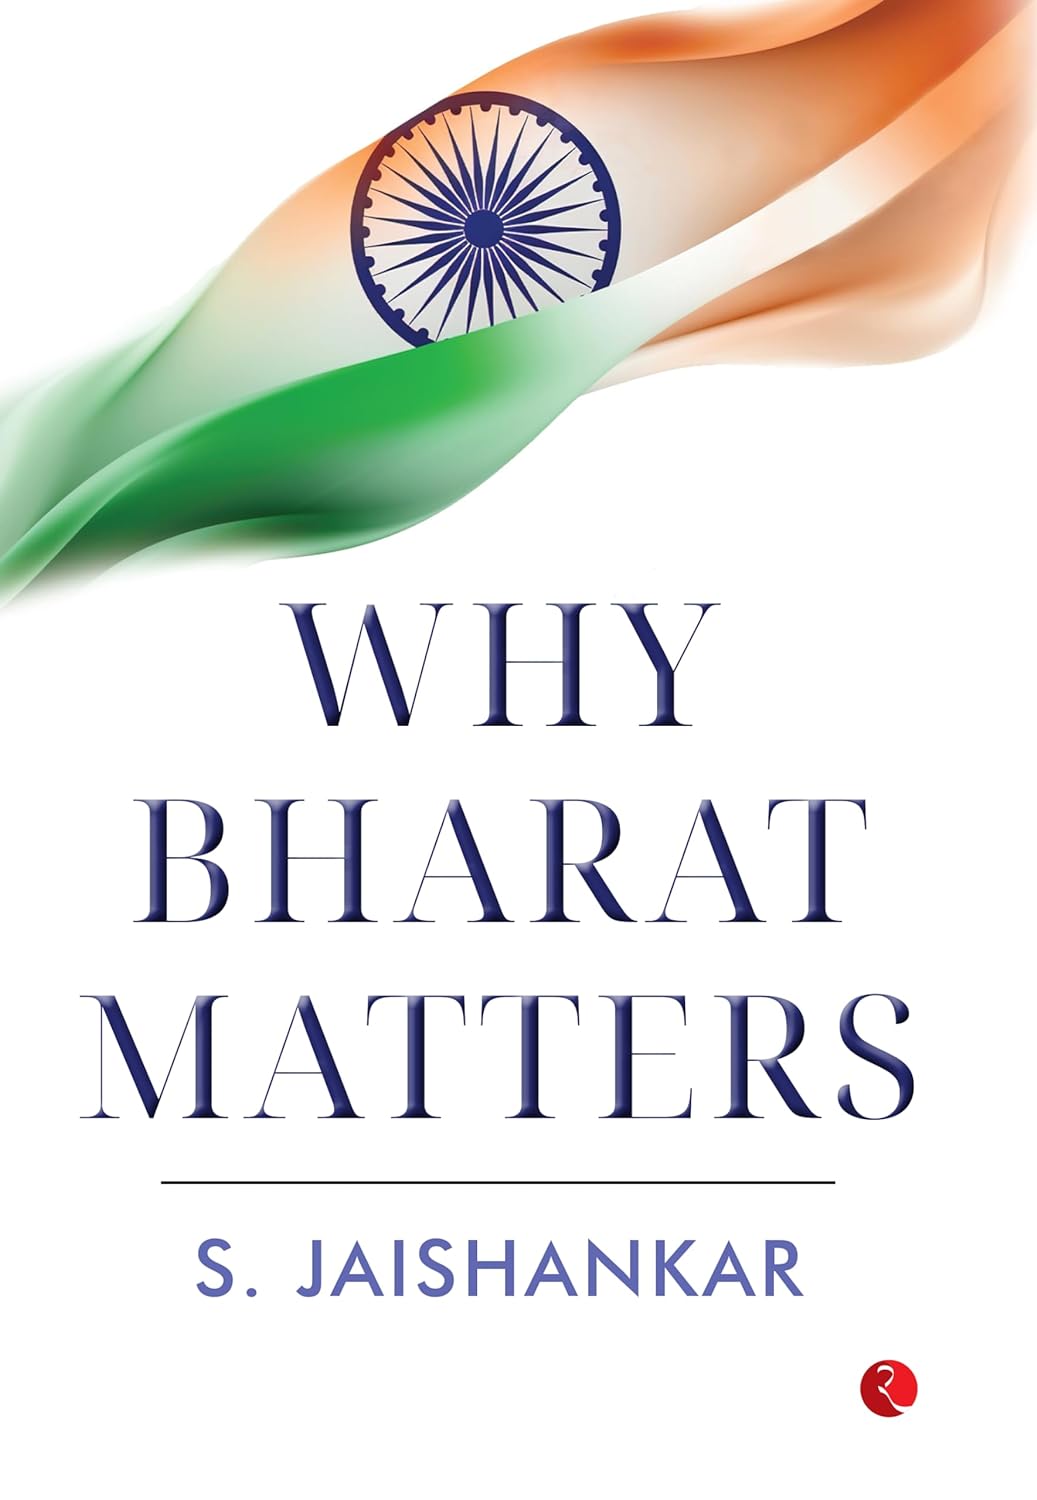 WHY BHARAT MATTERS By S. JAISHANKAR